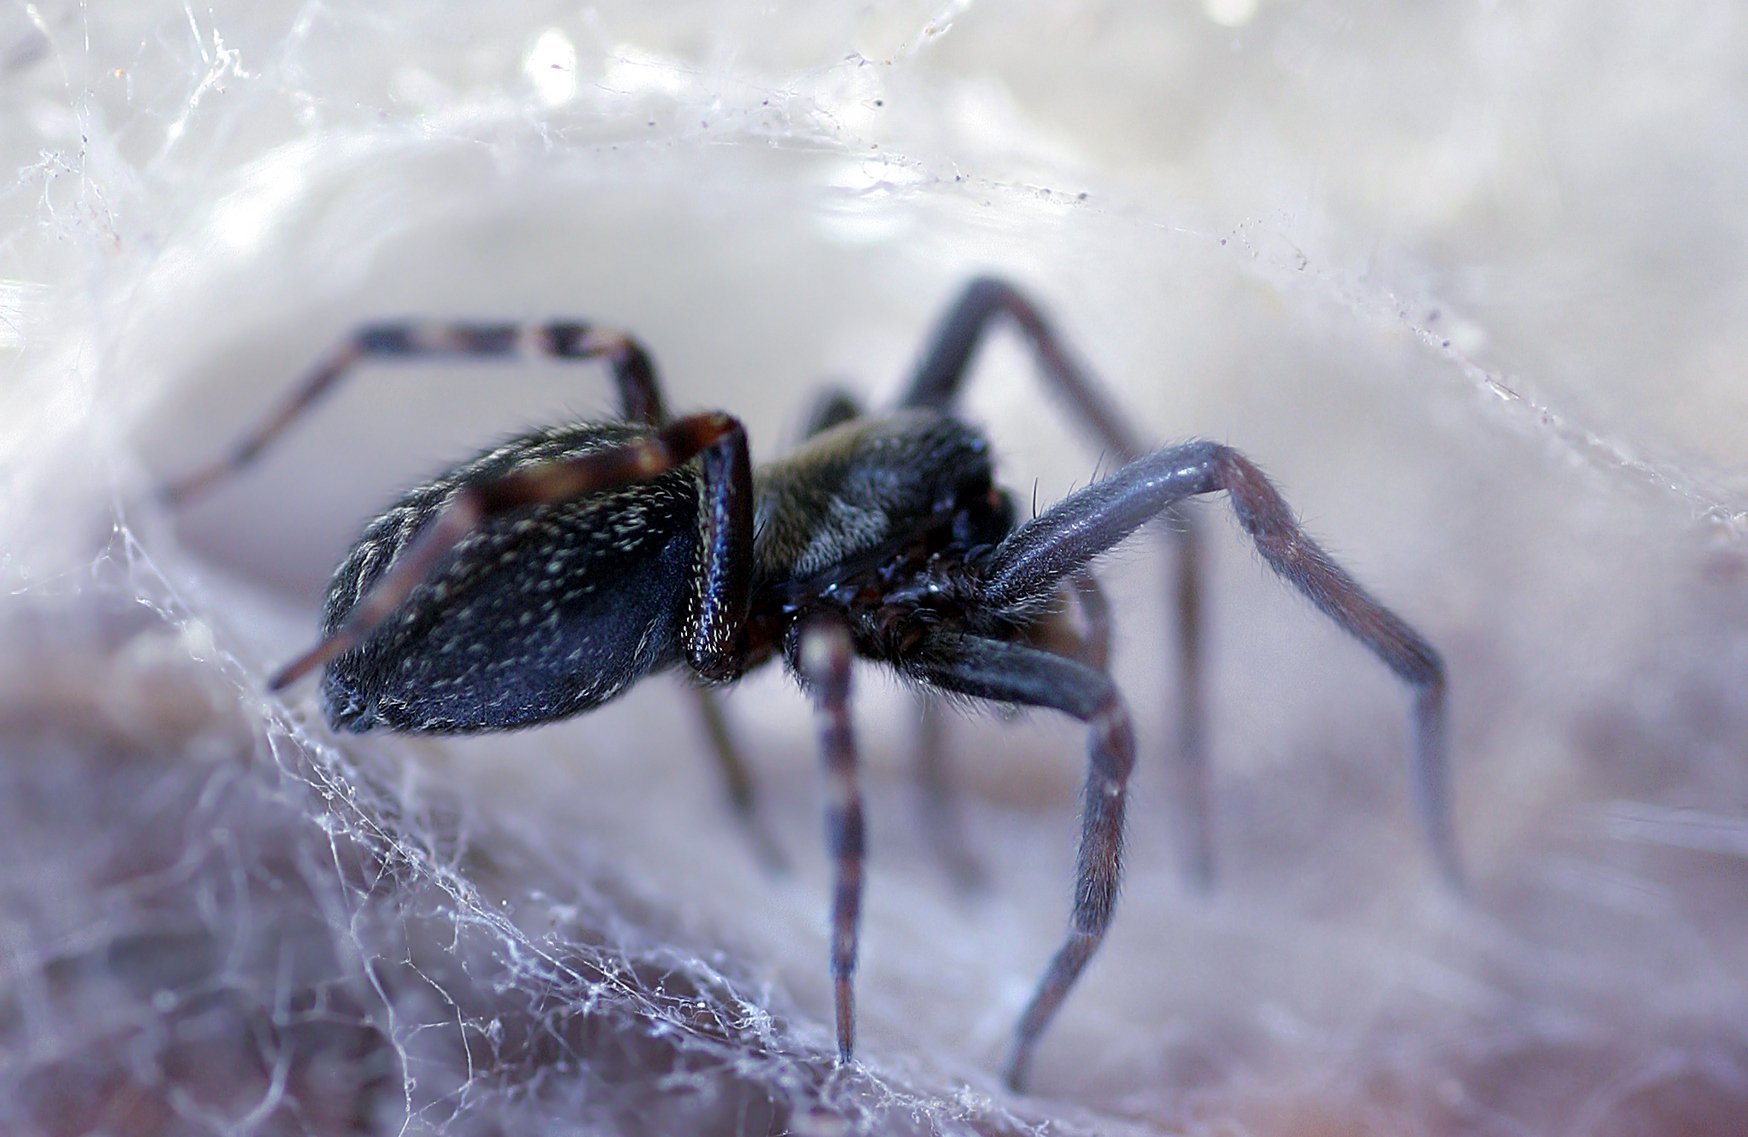 Black House Spider Australian Geographic